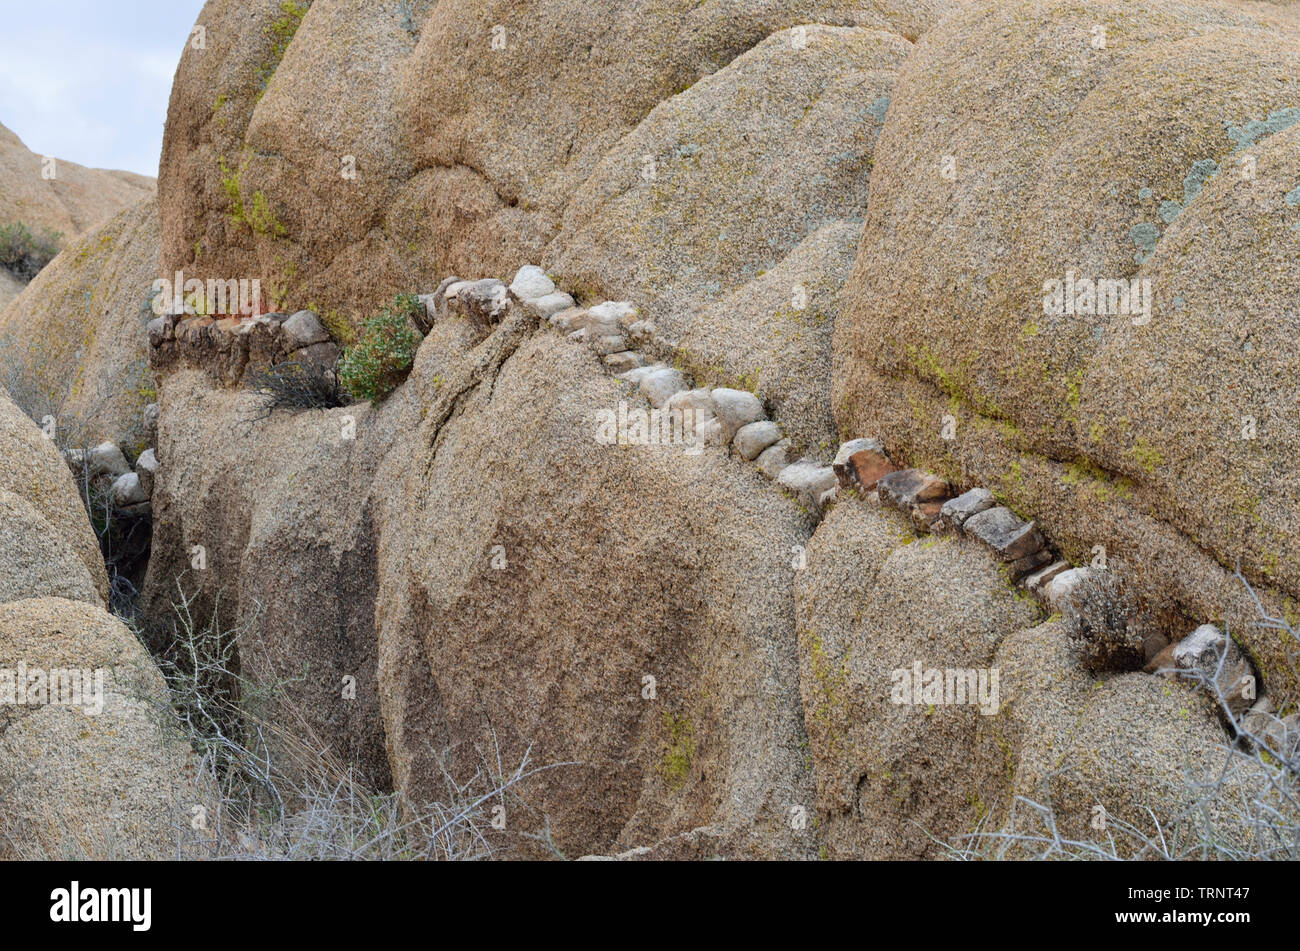 Monzogranite rock with Aplitic Vein (Intrusive igneous rock), Jumbo Rocks, Joshua Tree National Park, CA, USA 180312 7348 Stock Photo